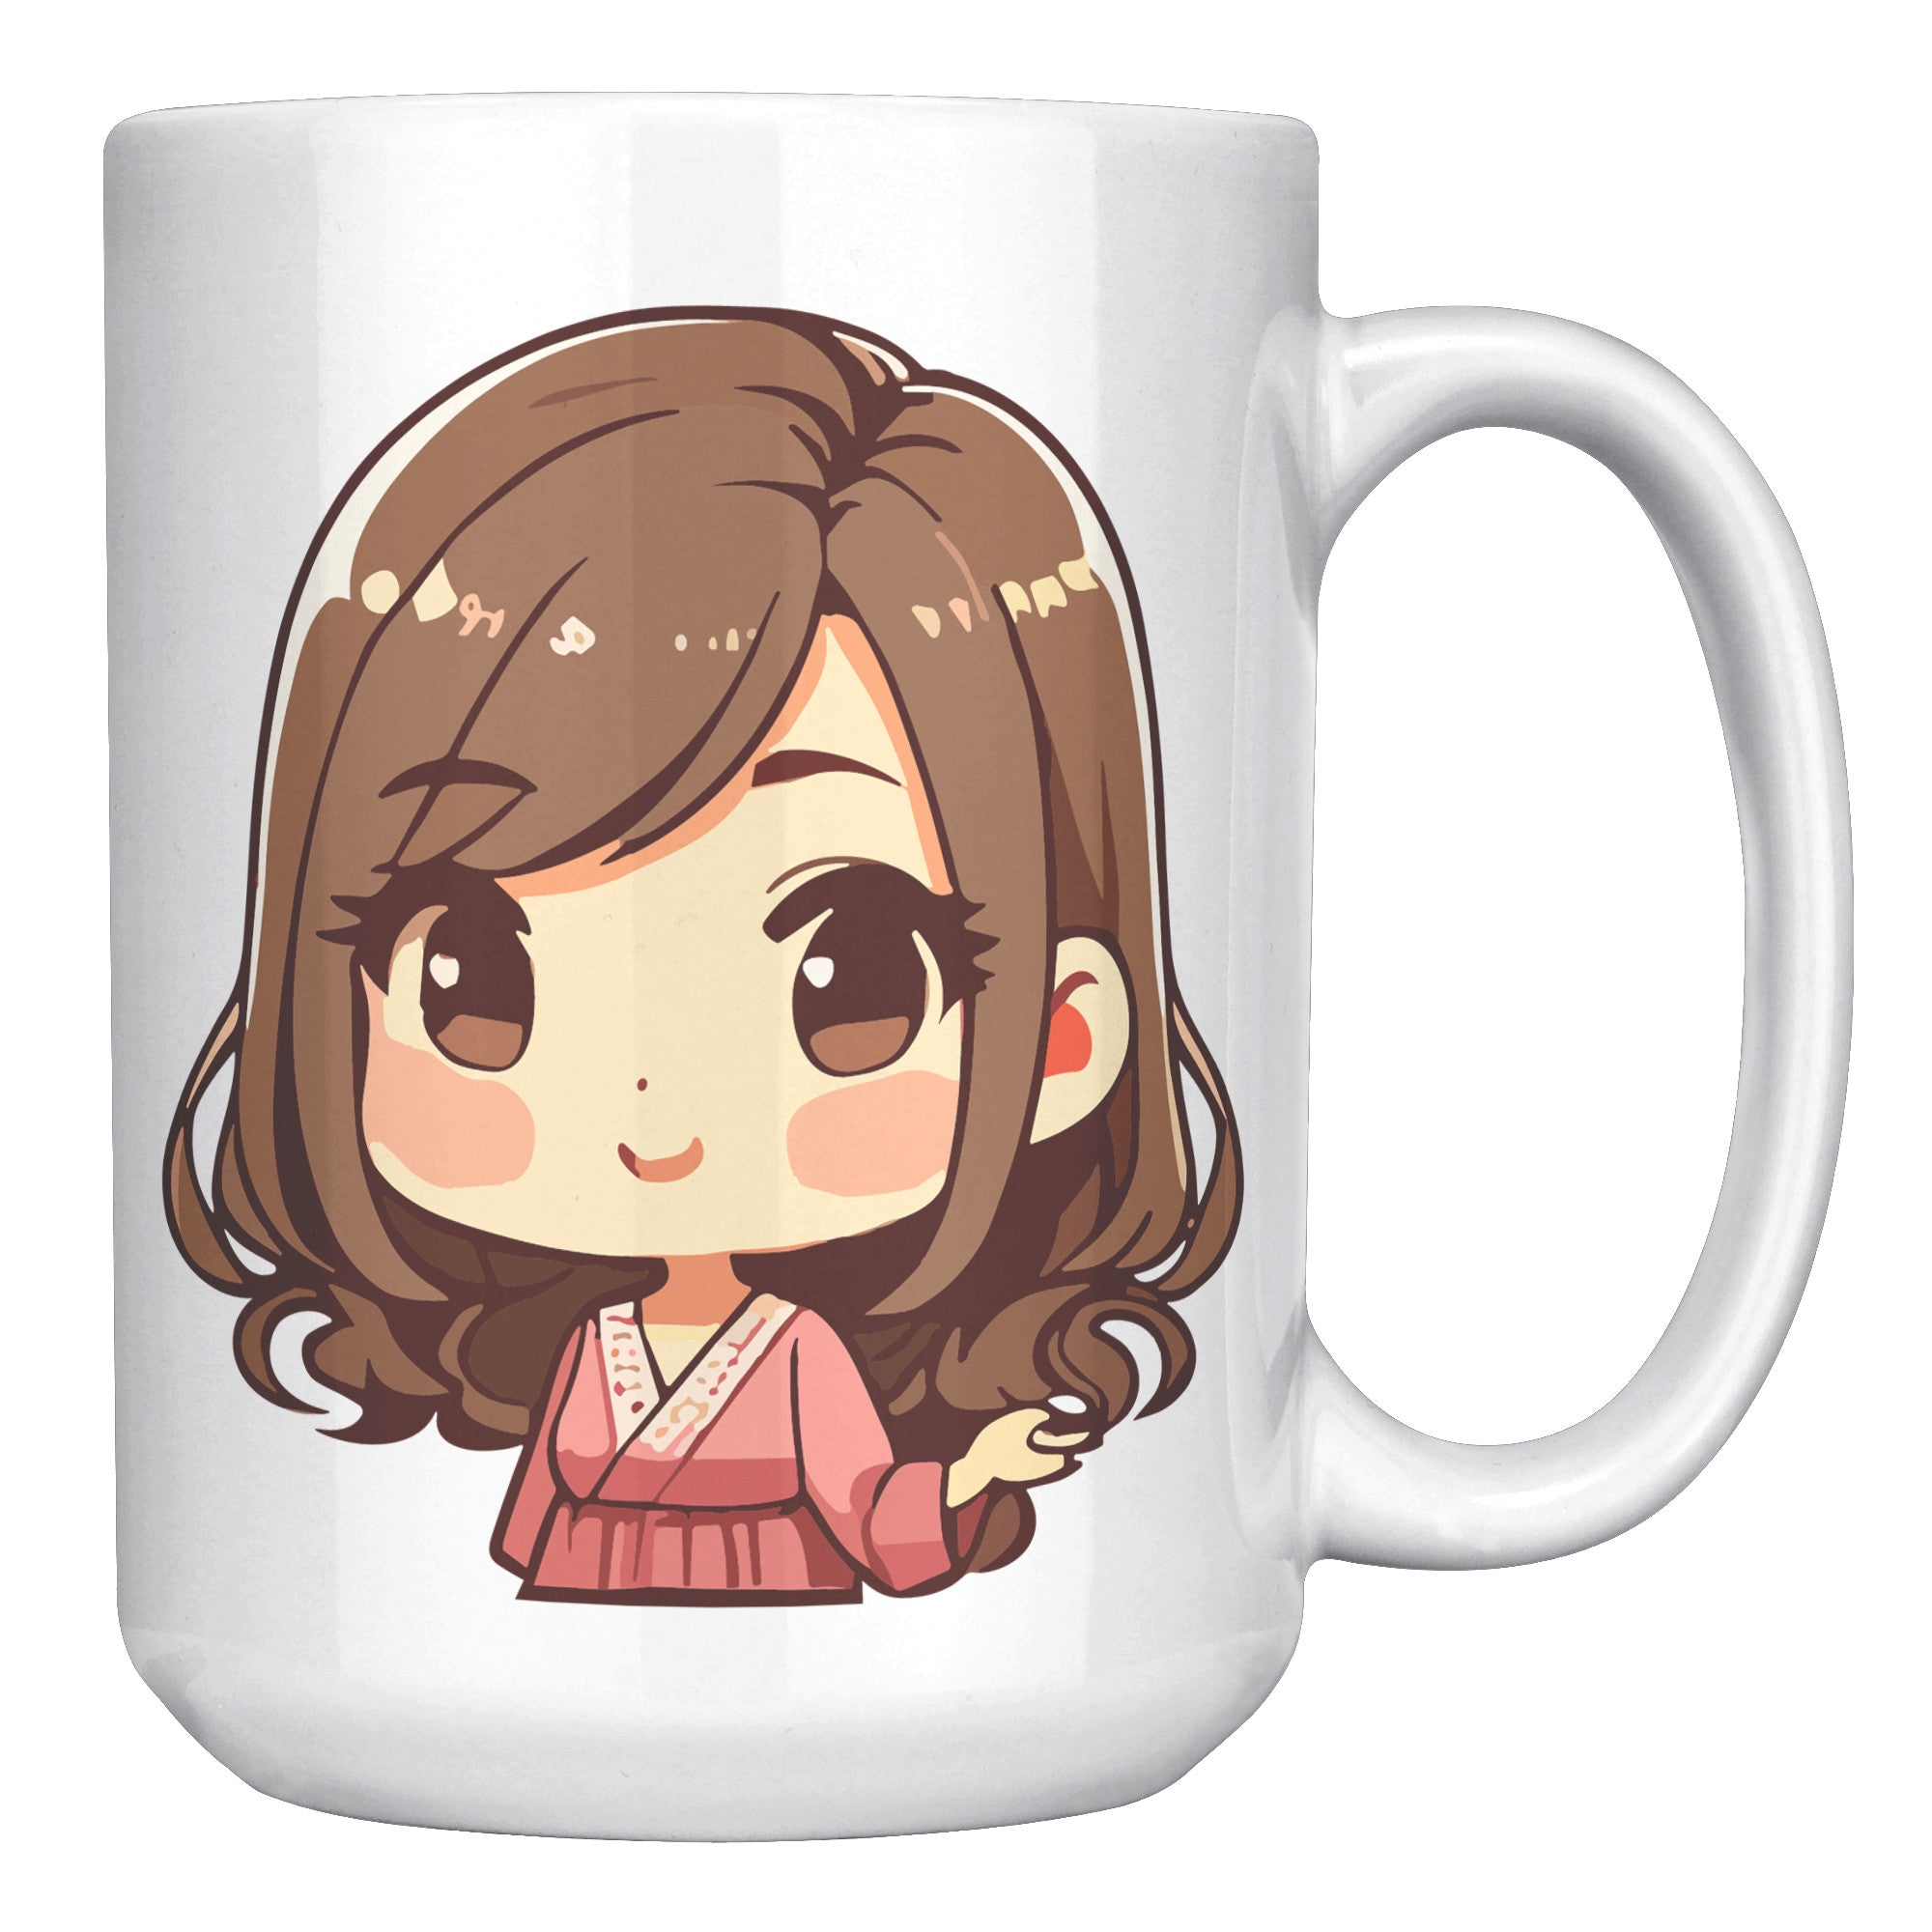 "Marites Gossip Queen Coffee Mug - Cute Cartoon 'Ano Ang Latest?' Cup - Perfect Chismosa Gift - Filipino Slang Tea Mug" - FF1